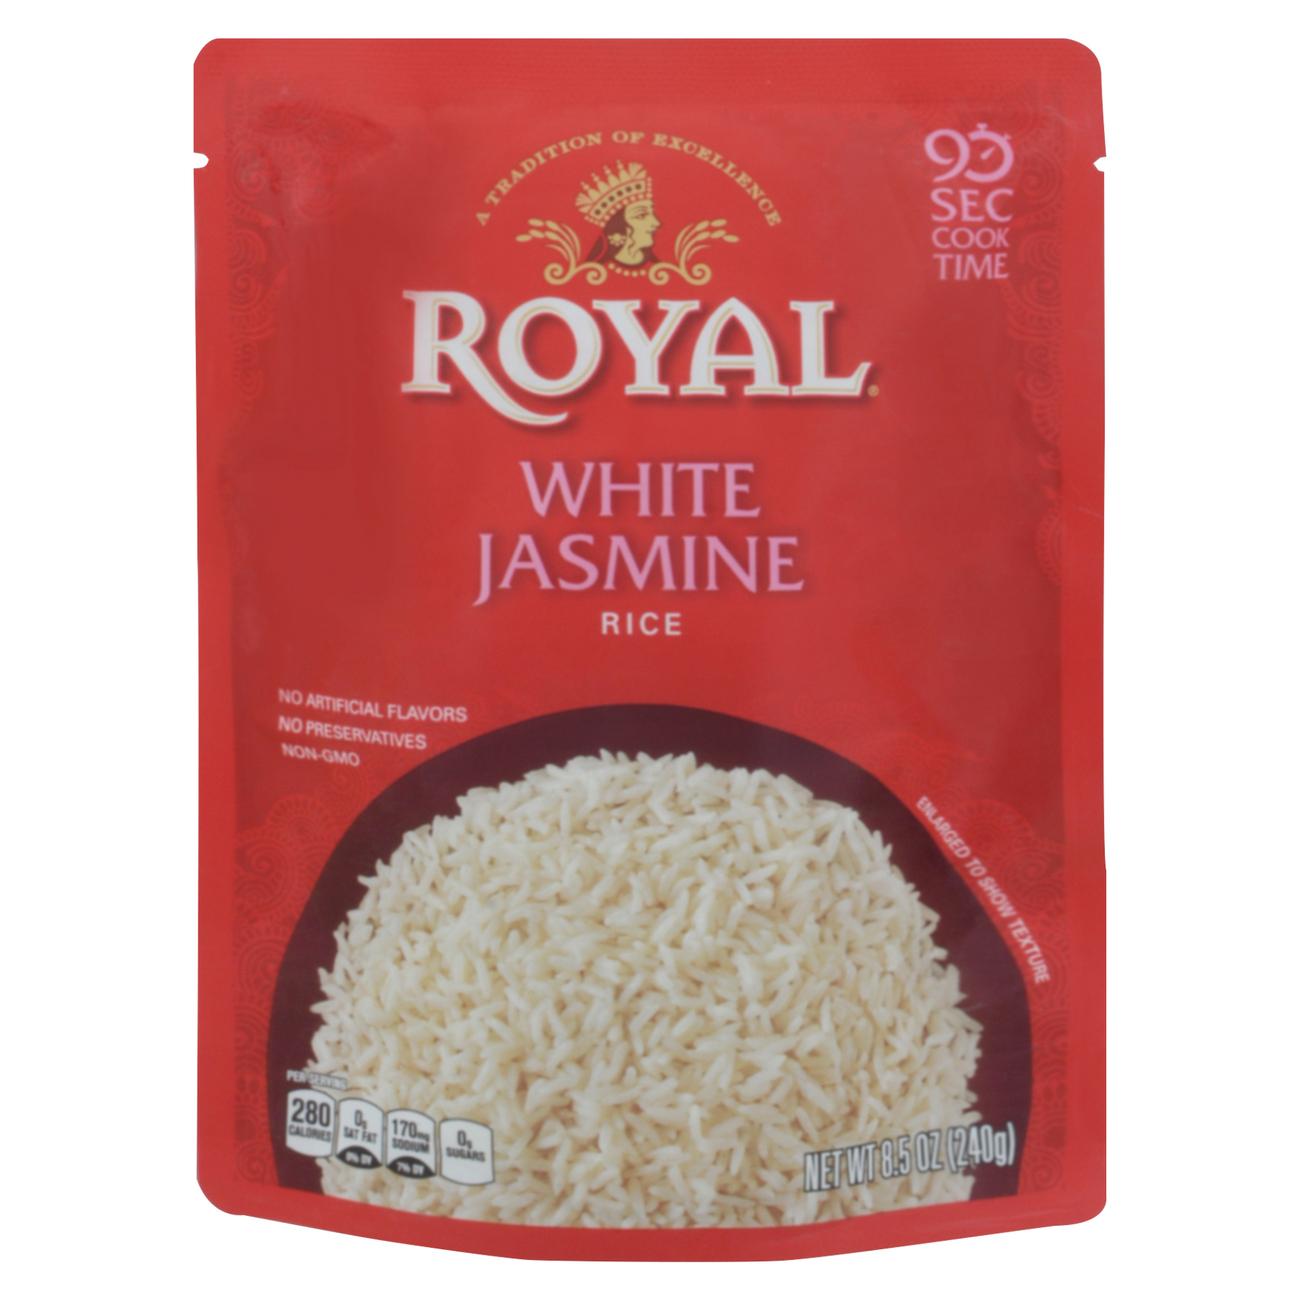 Royal White Jasmine Rice